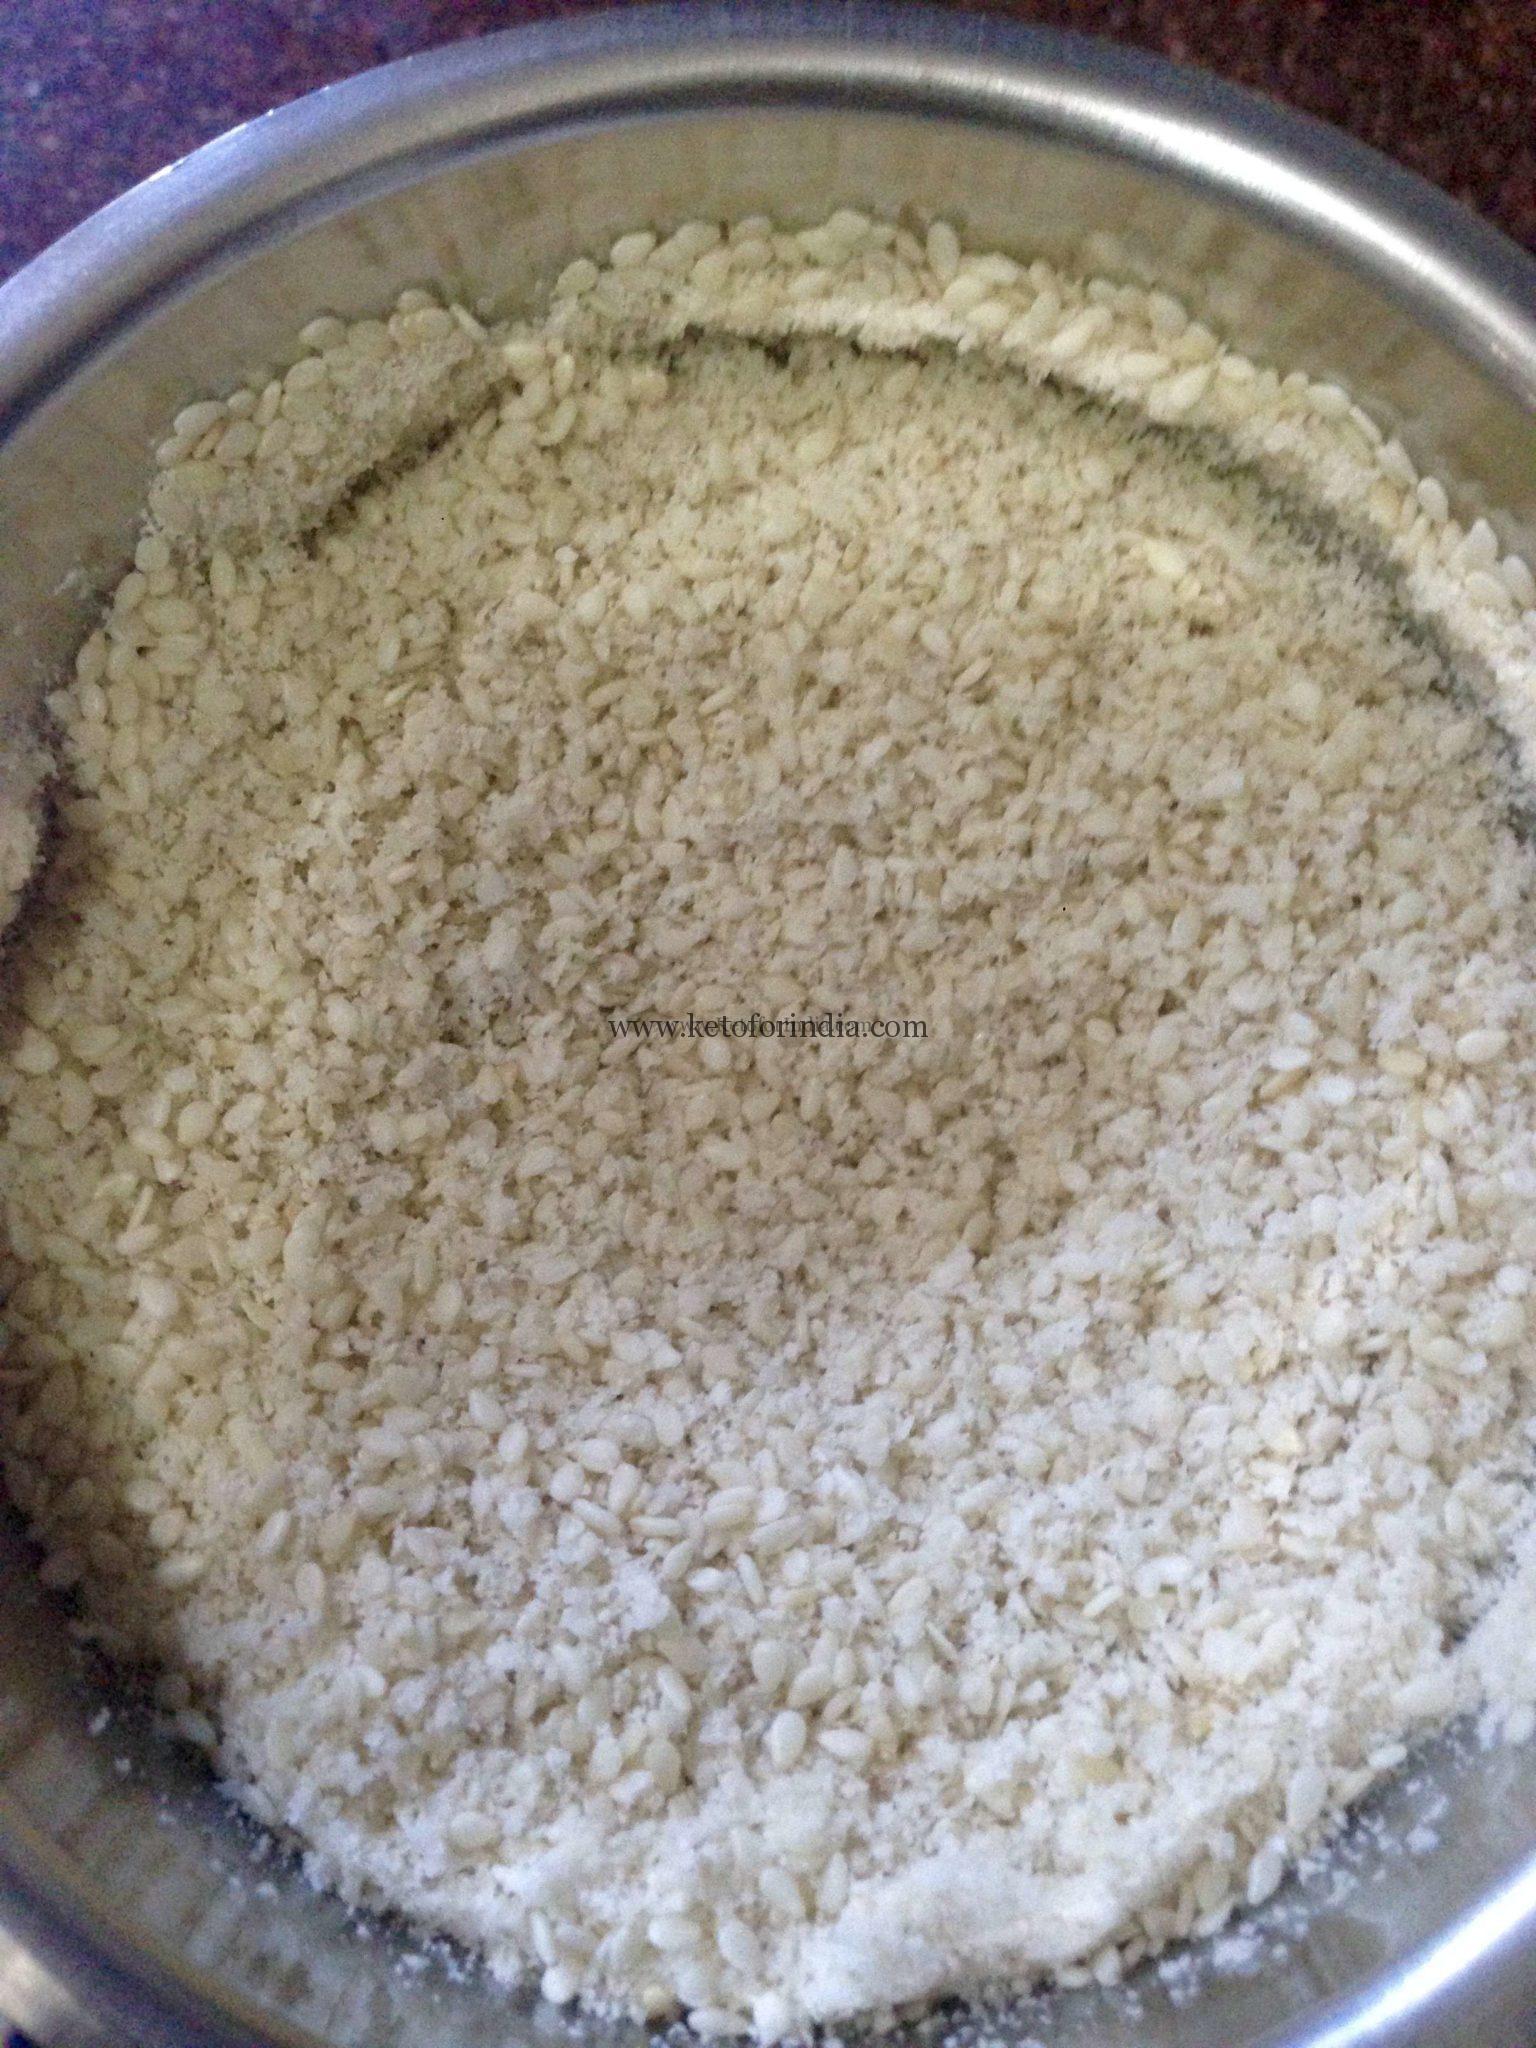 Coarsely grind sesame seeds: Priya's Indian keto til laddoo